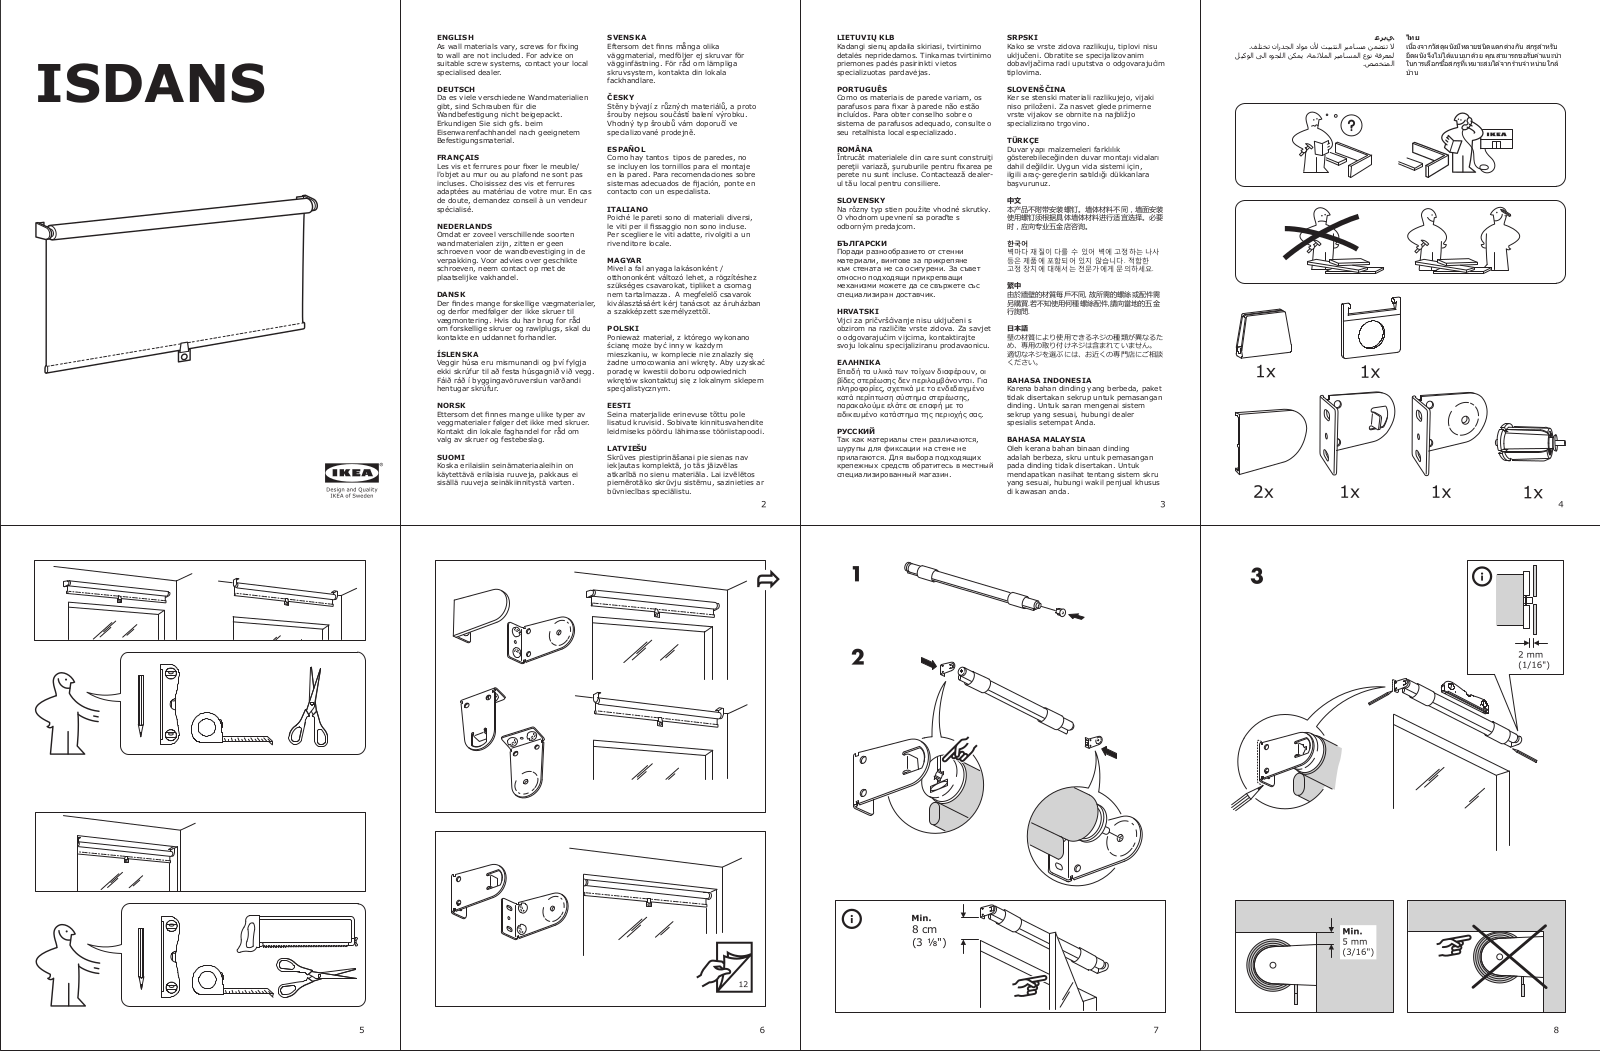 IKEA ISDANS User Manual